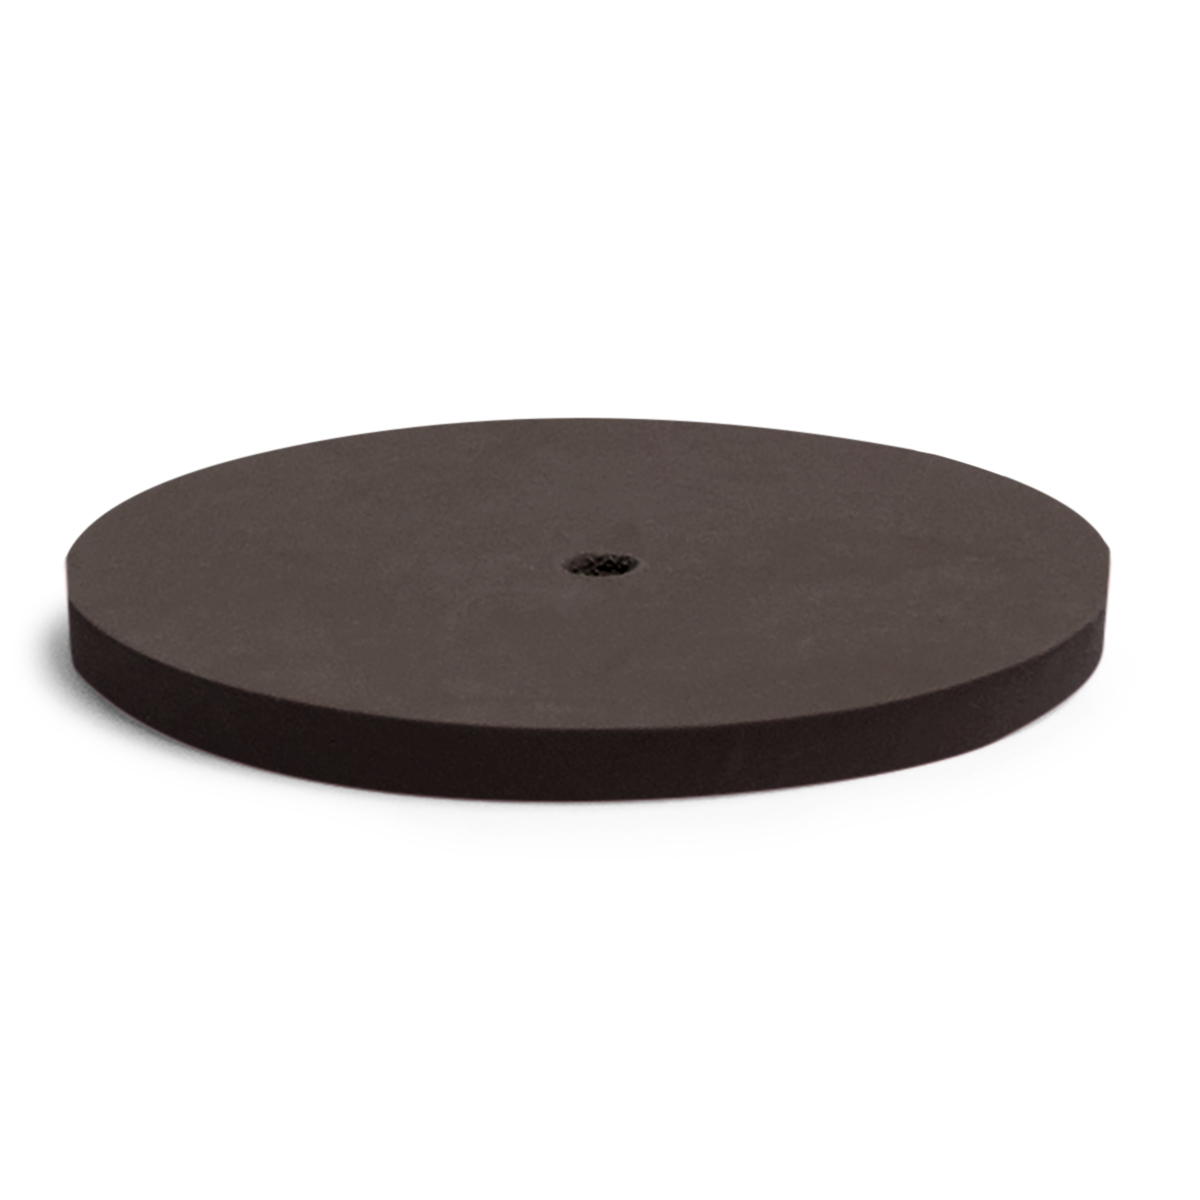 Meulette Chromopol, marron, 0205UM Grain moyen - Ø22,0/1,3 mm, disque